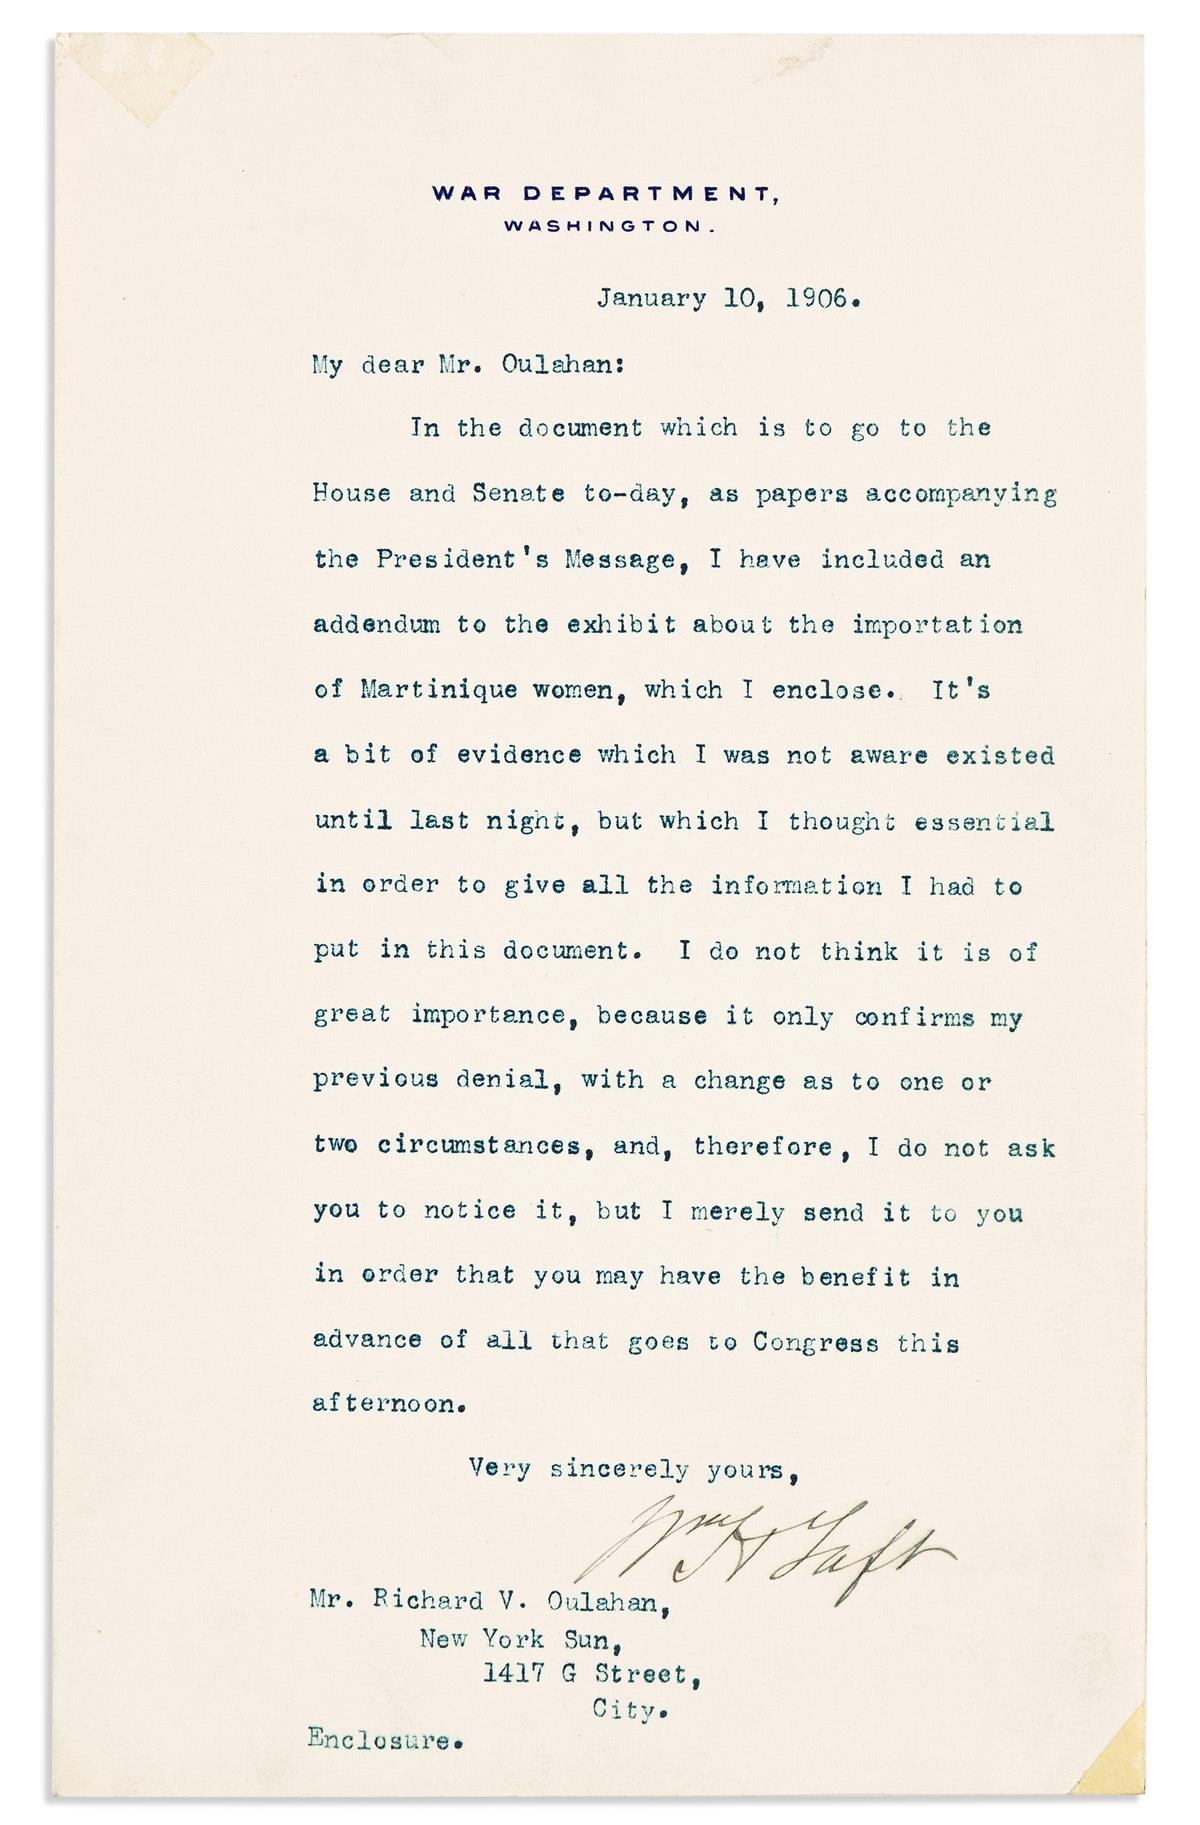 TAFT, WILLIAM HOWARD. Typed Letter Signed, WmHTaft, as Secretary of War, to Washington correspondent for The Sun Richard V. Oulahan,